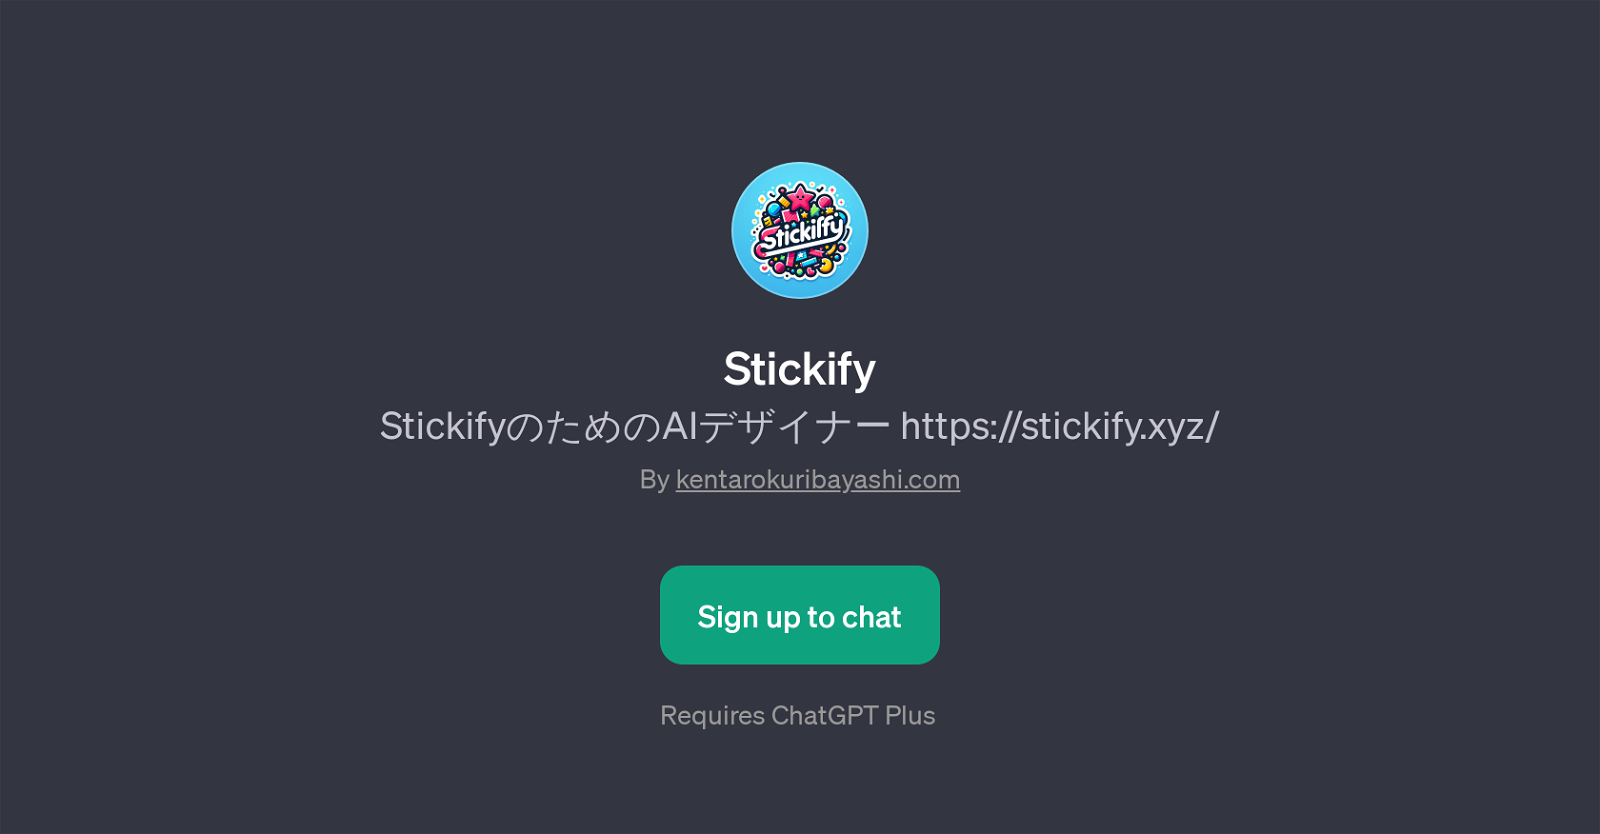 Stickify website